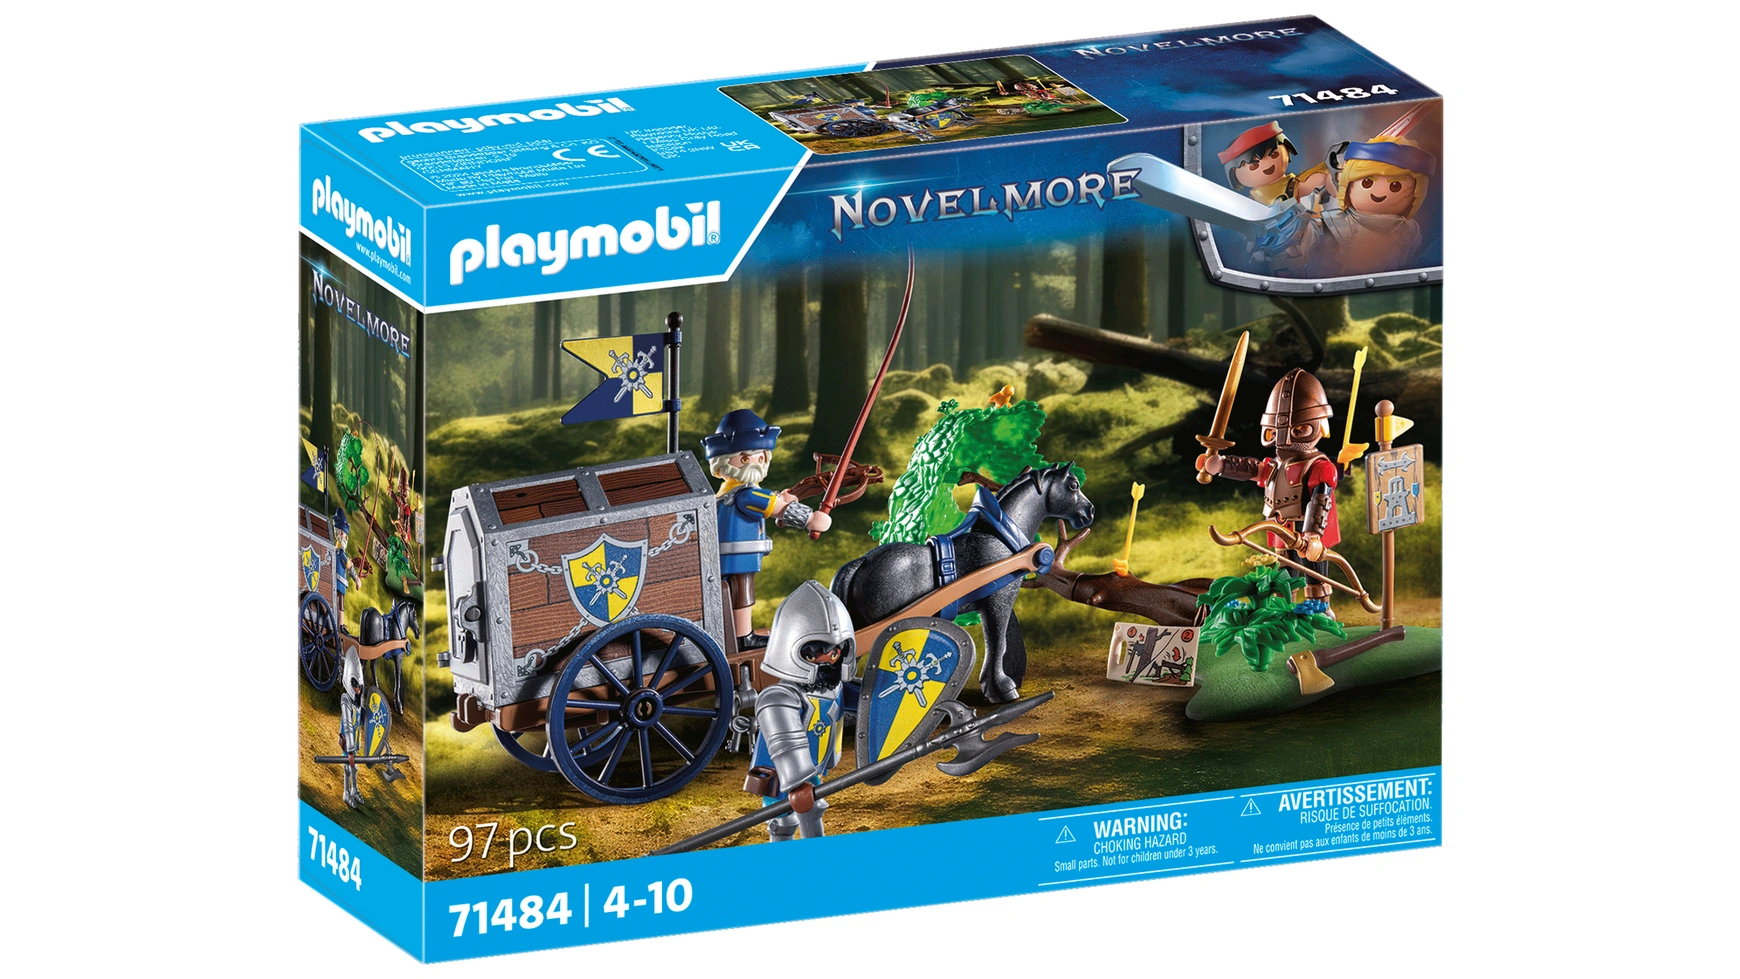 novelmore мои фигурки рыцари новелмора playmobil Novelmore рейд грузового транспорта Playmobil